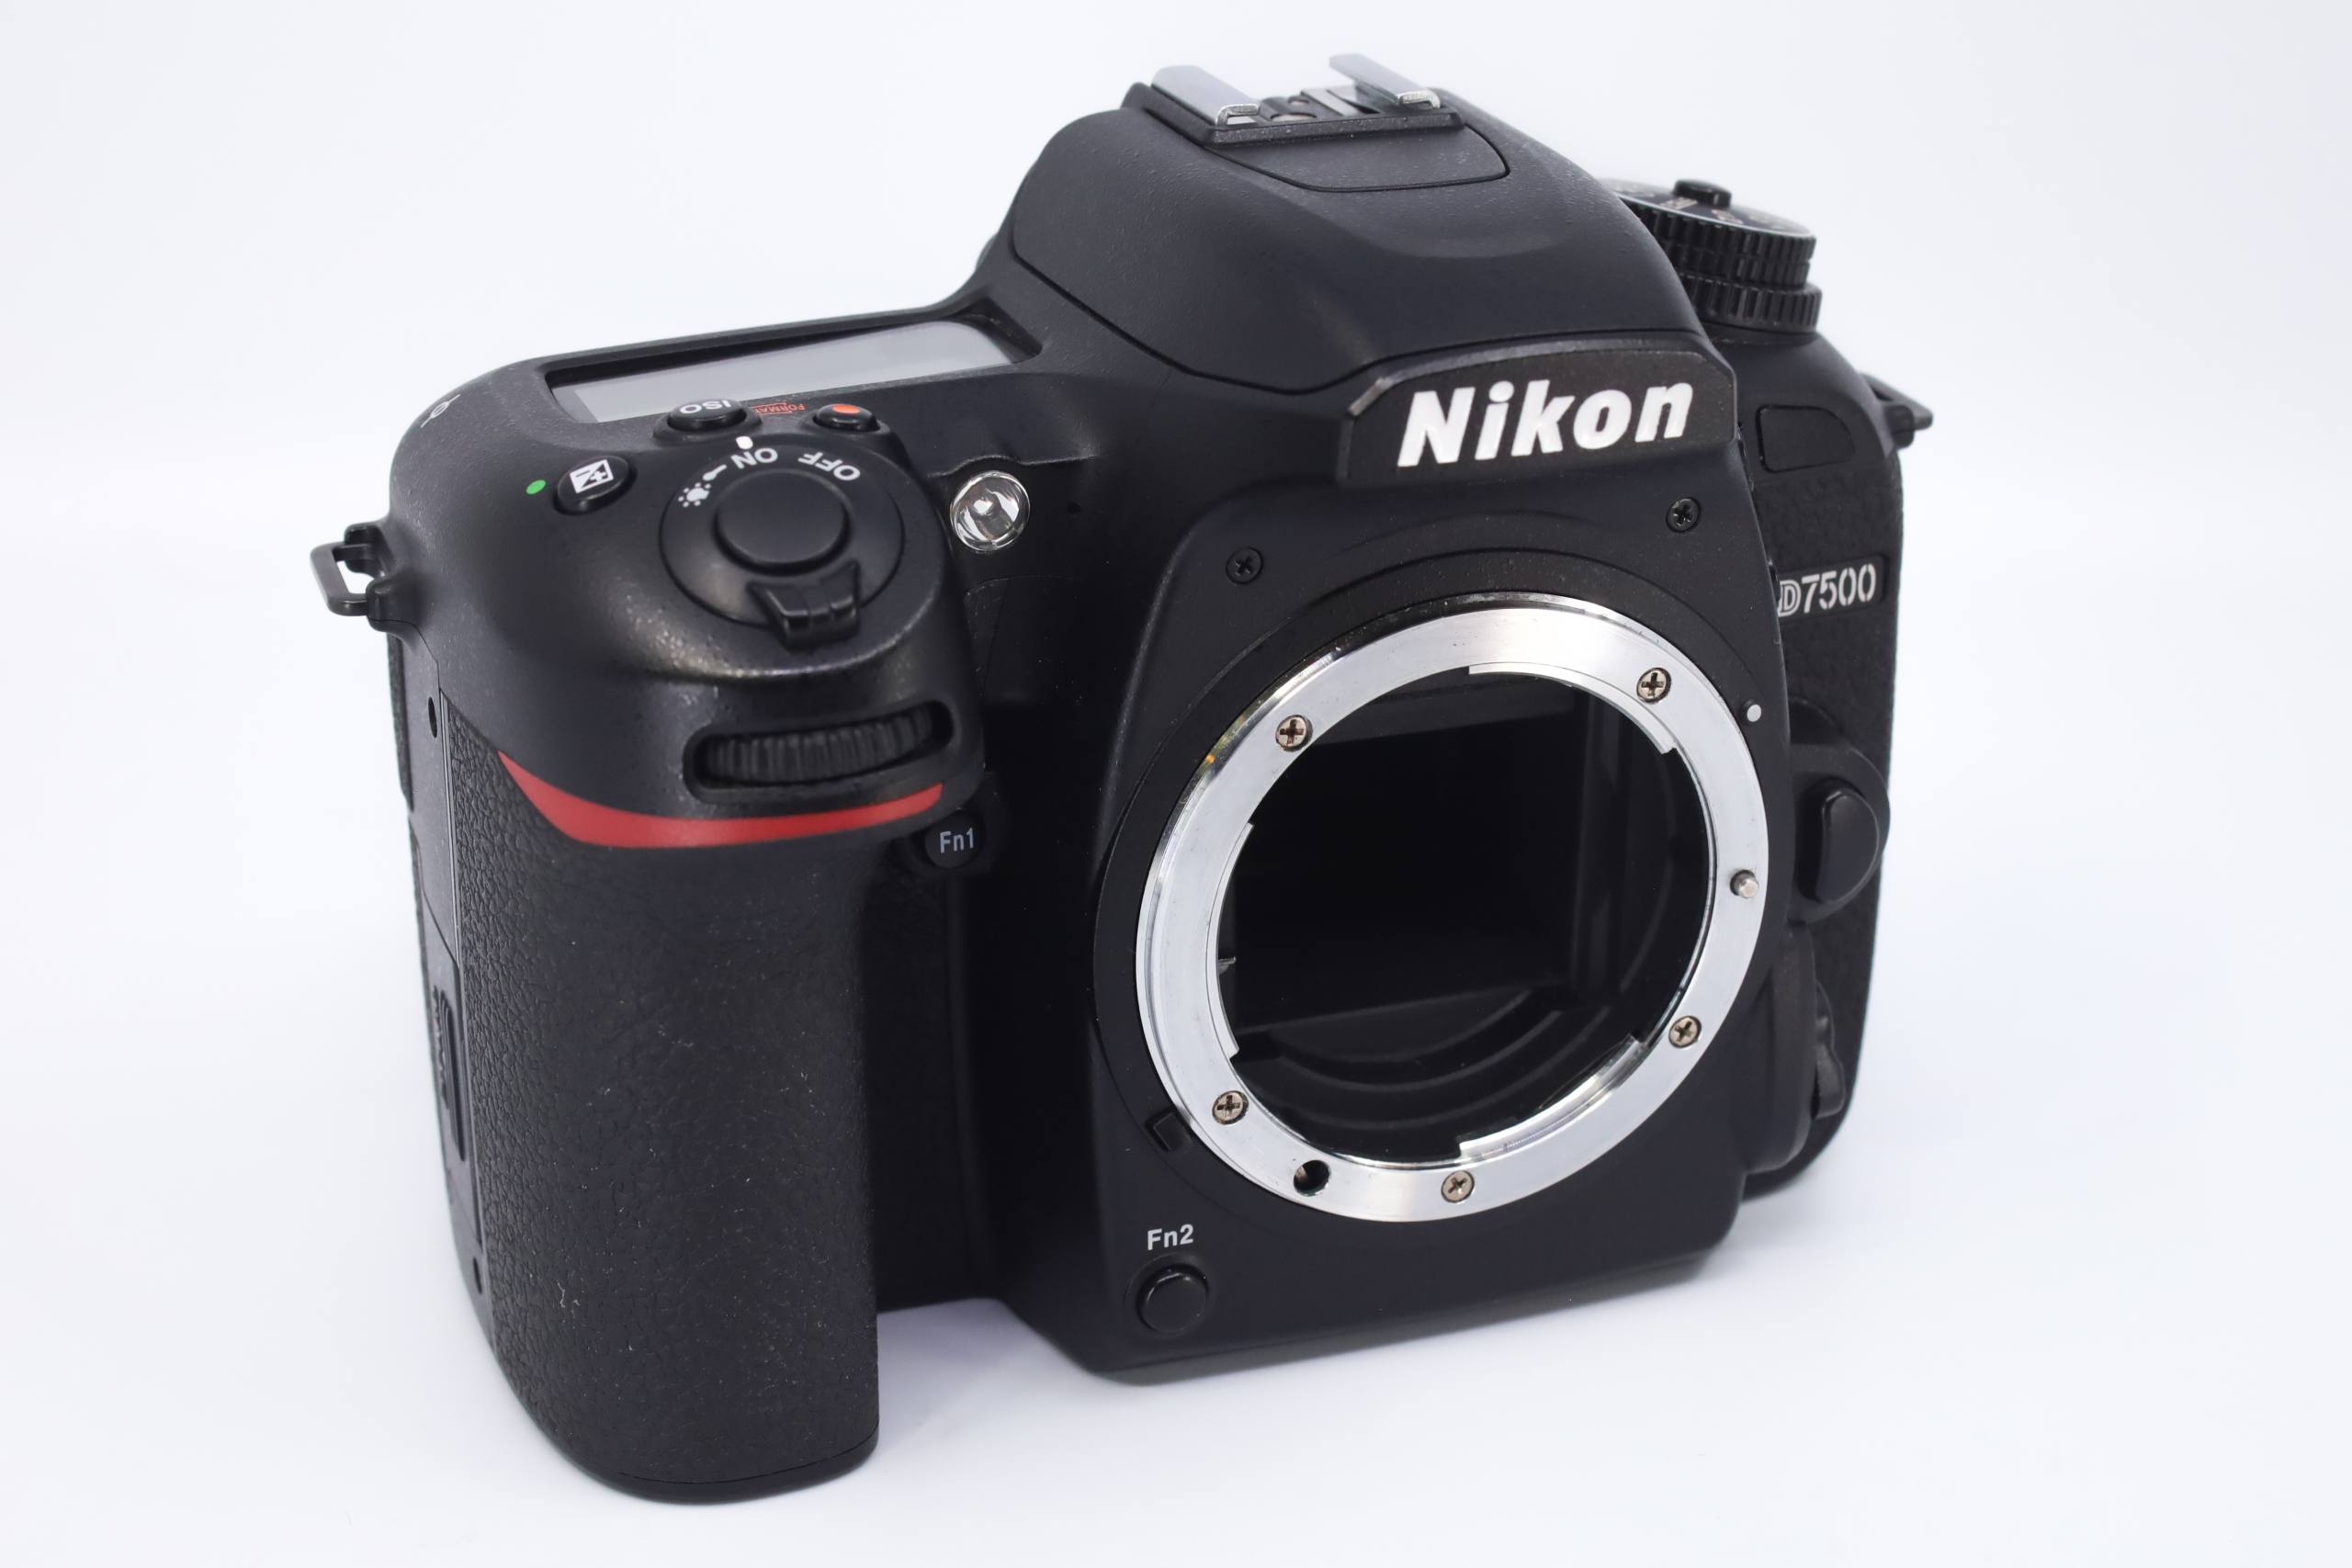 Nikon D7500 DSLR Camera (Body Only)